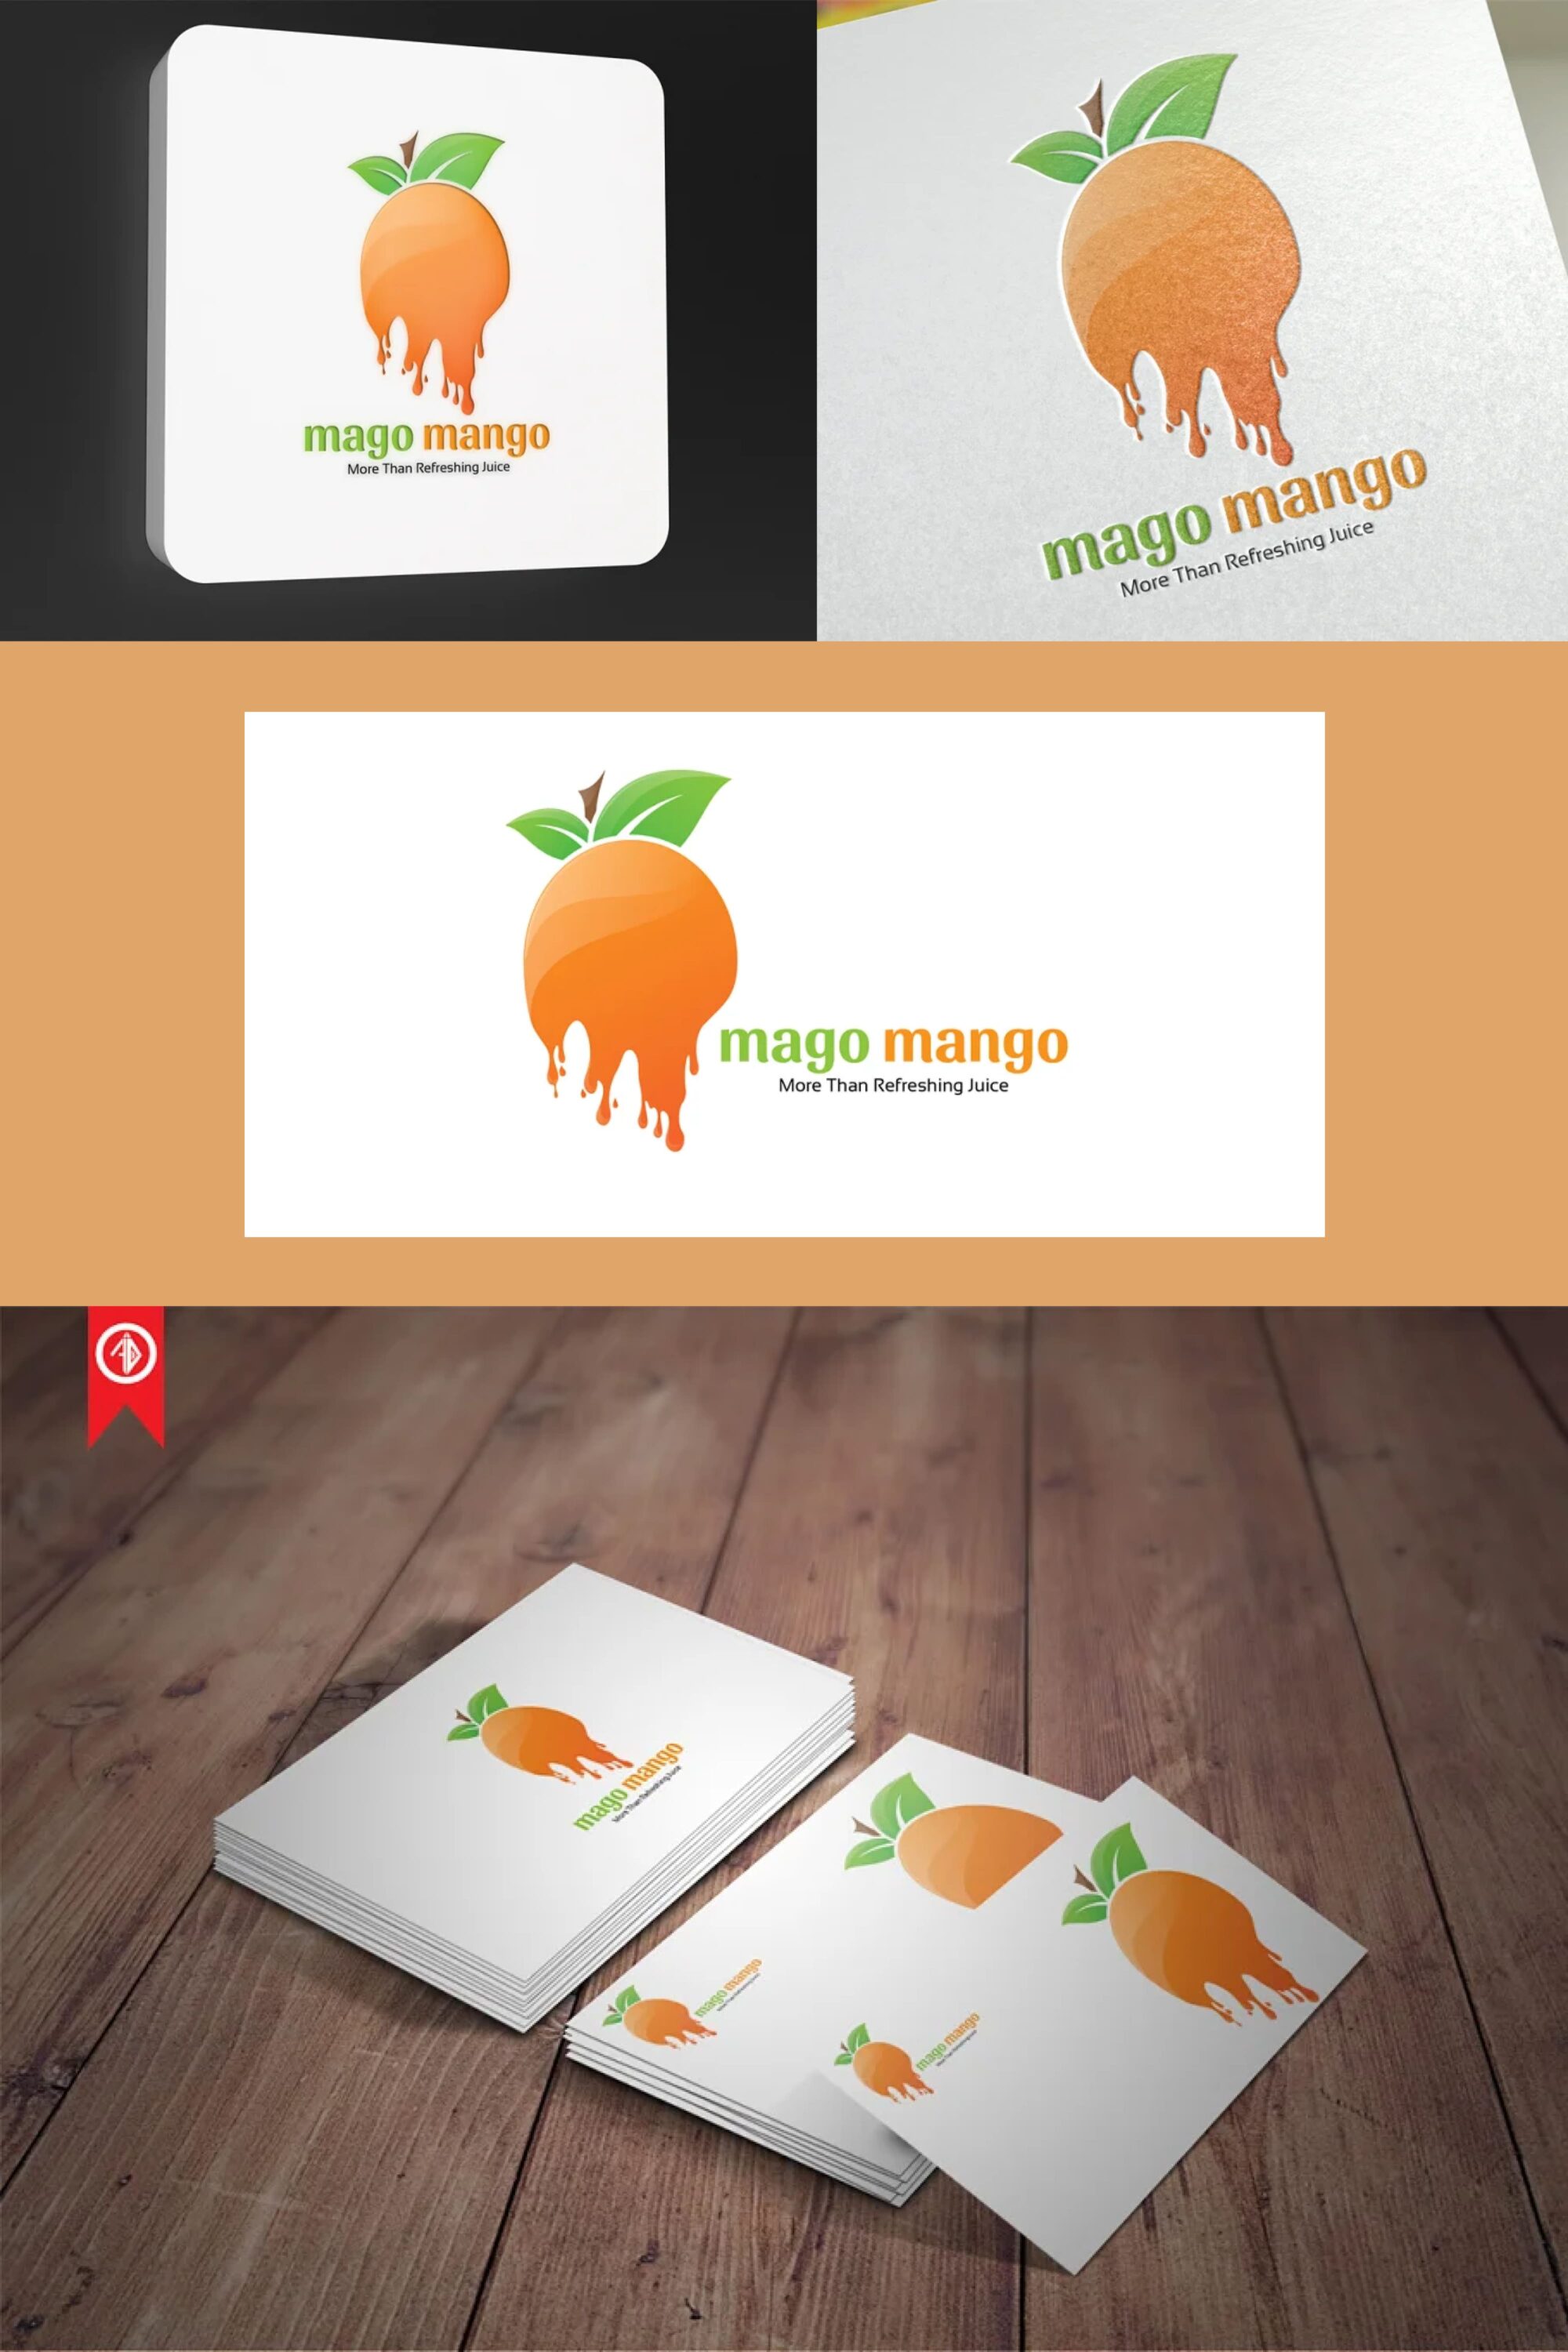 mago mango juice logo template 06